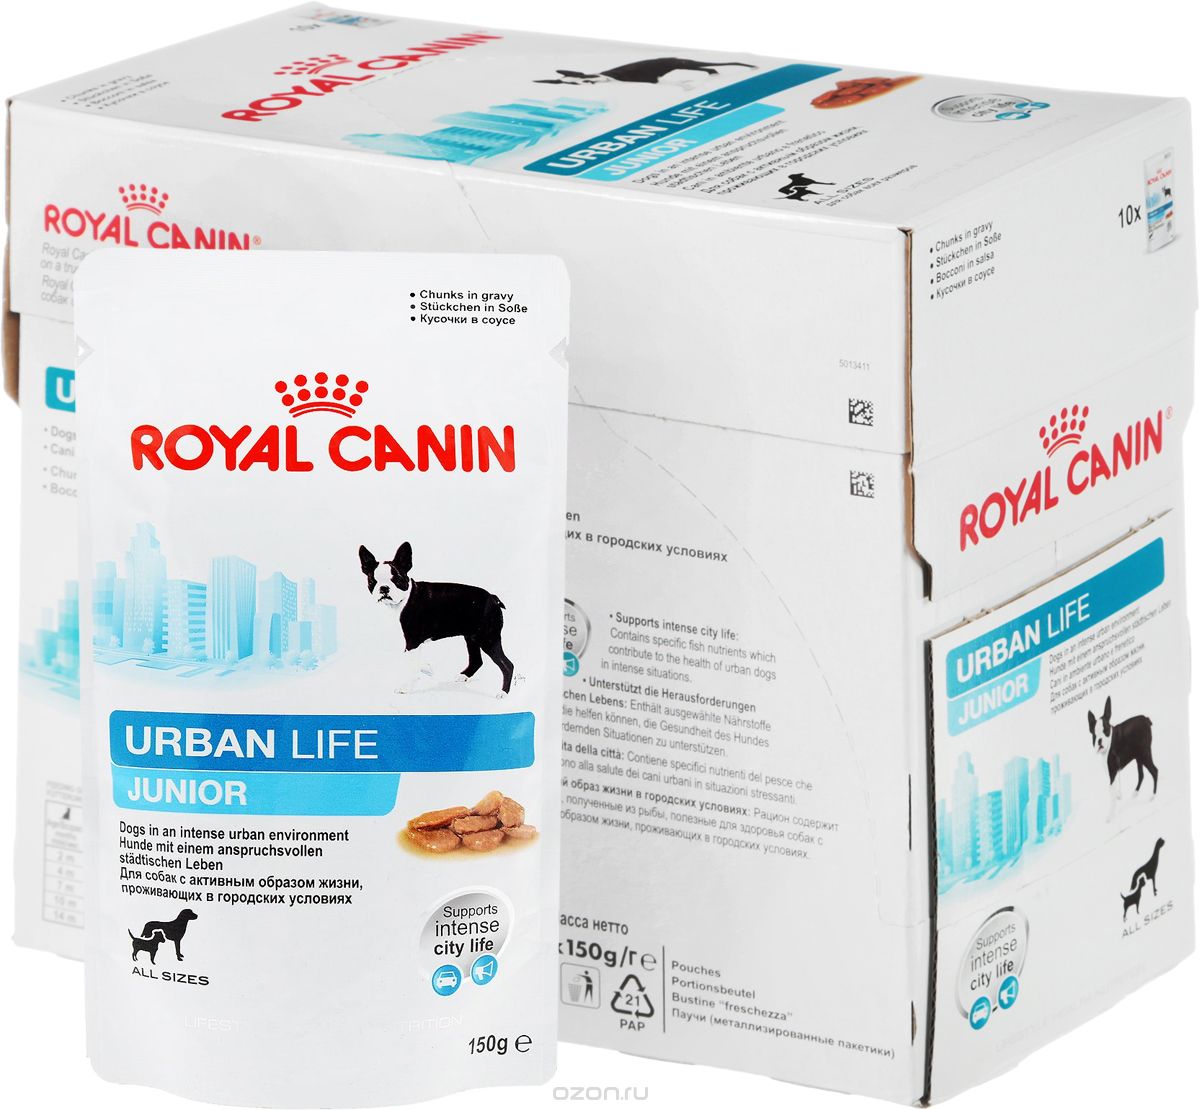  Royal Canin 